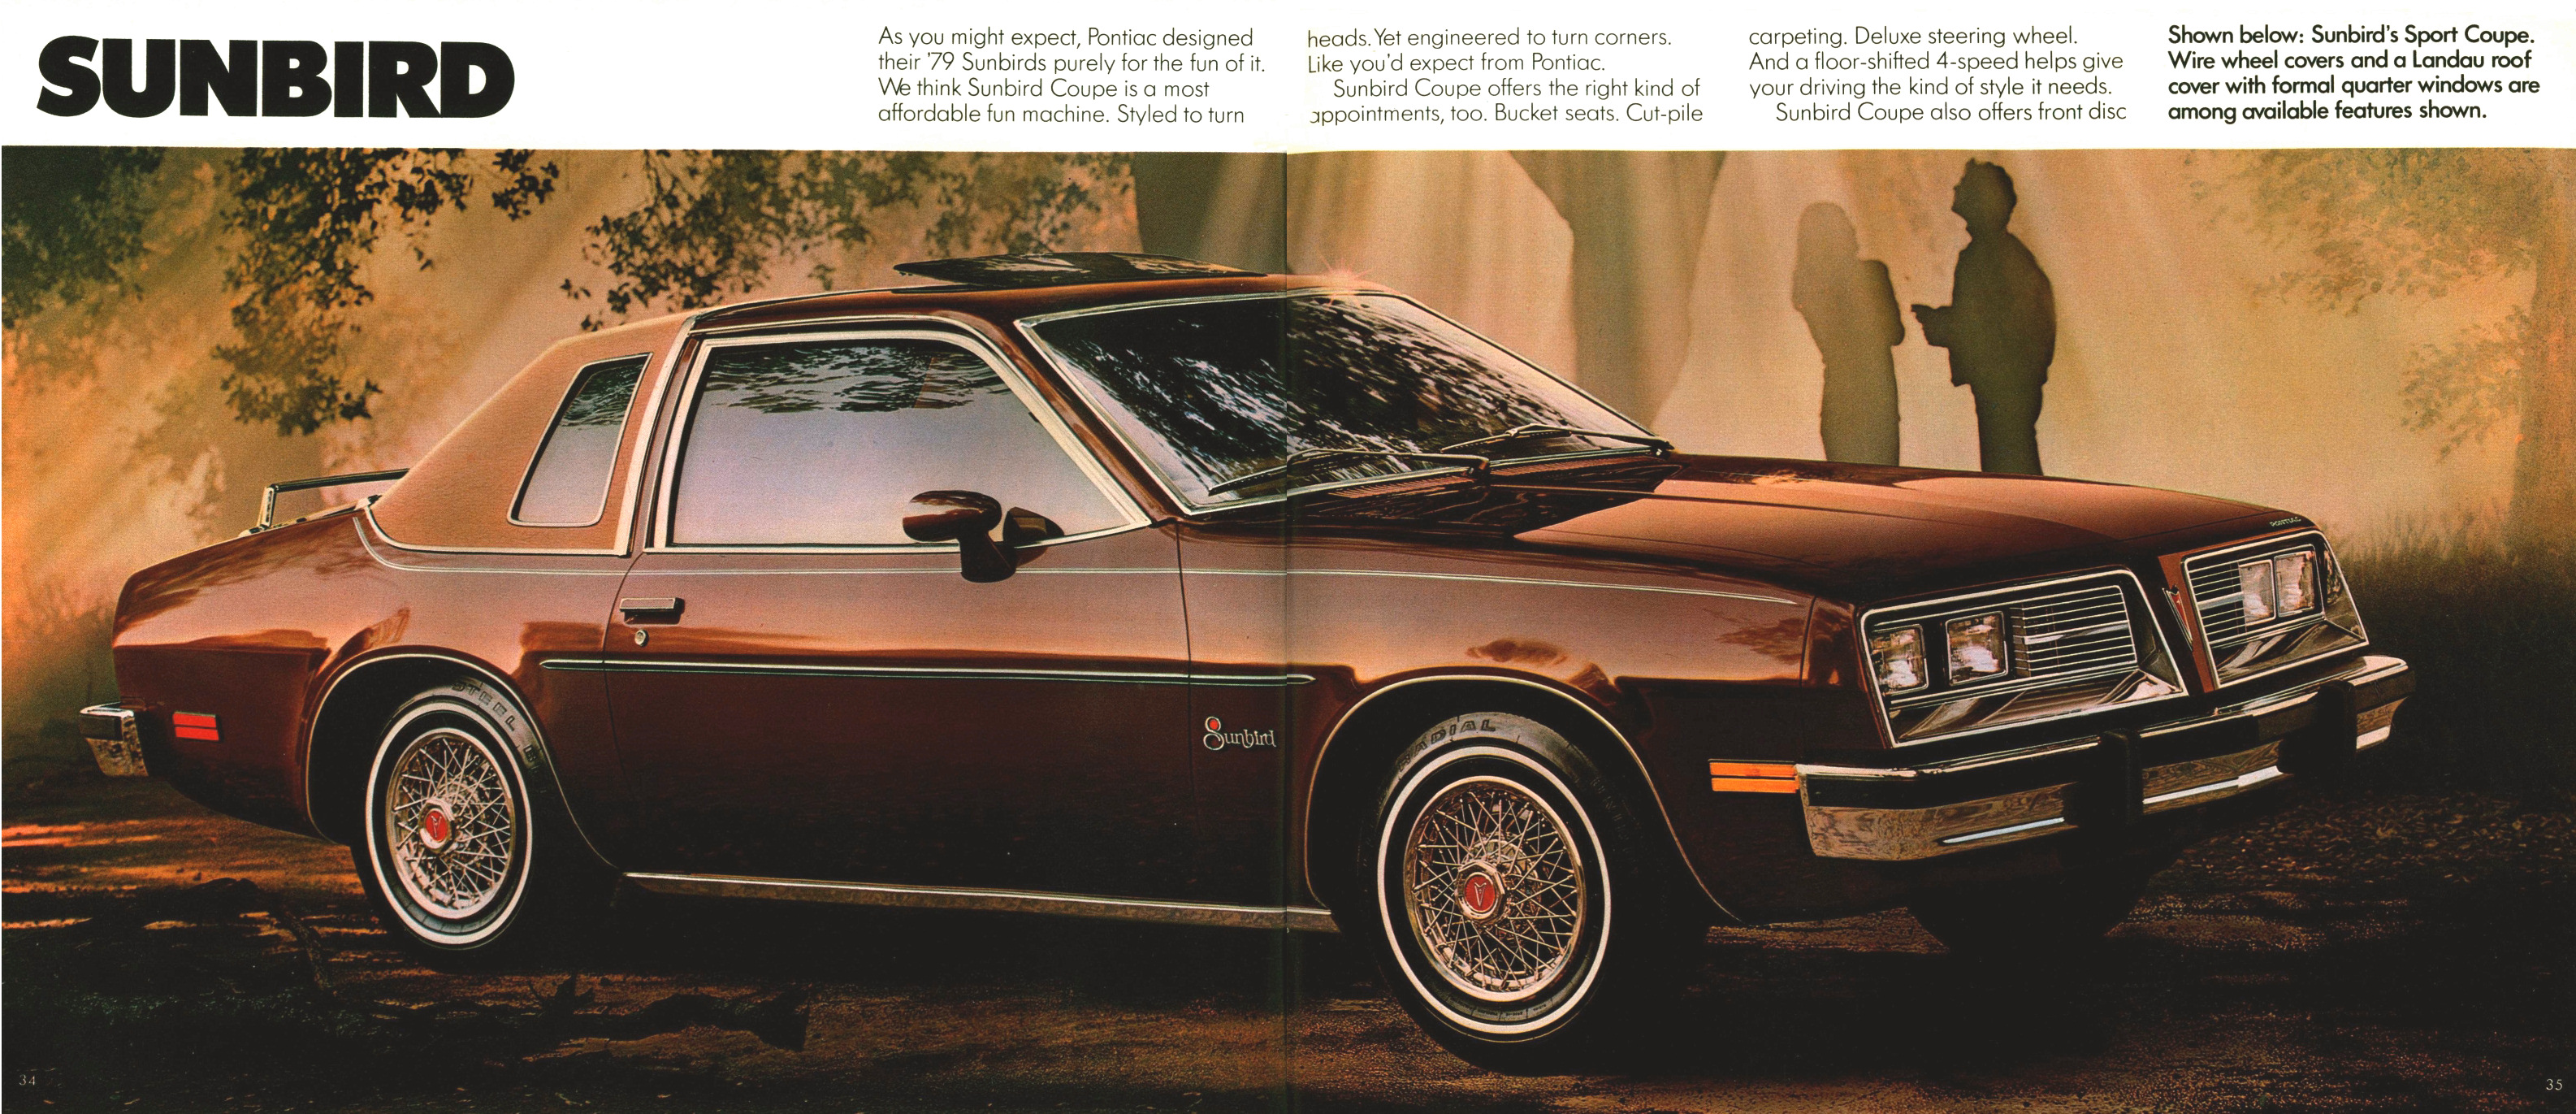 1979_Pontiac_Full_Line_Cdn-34-35